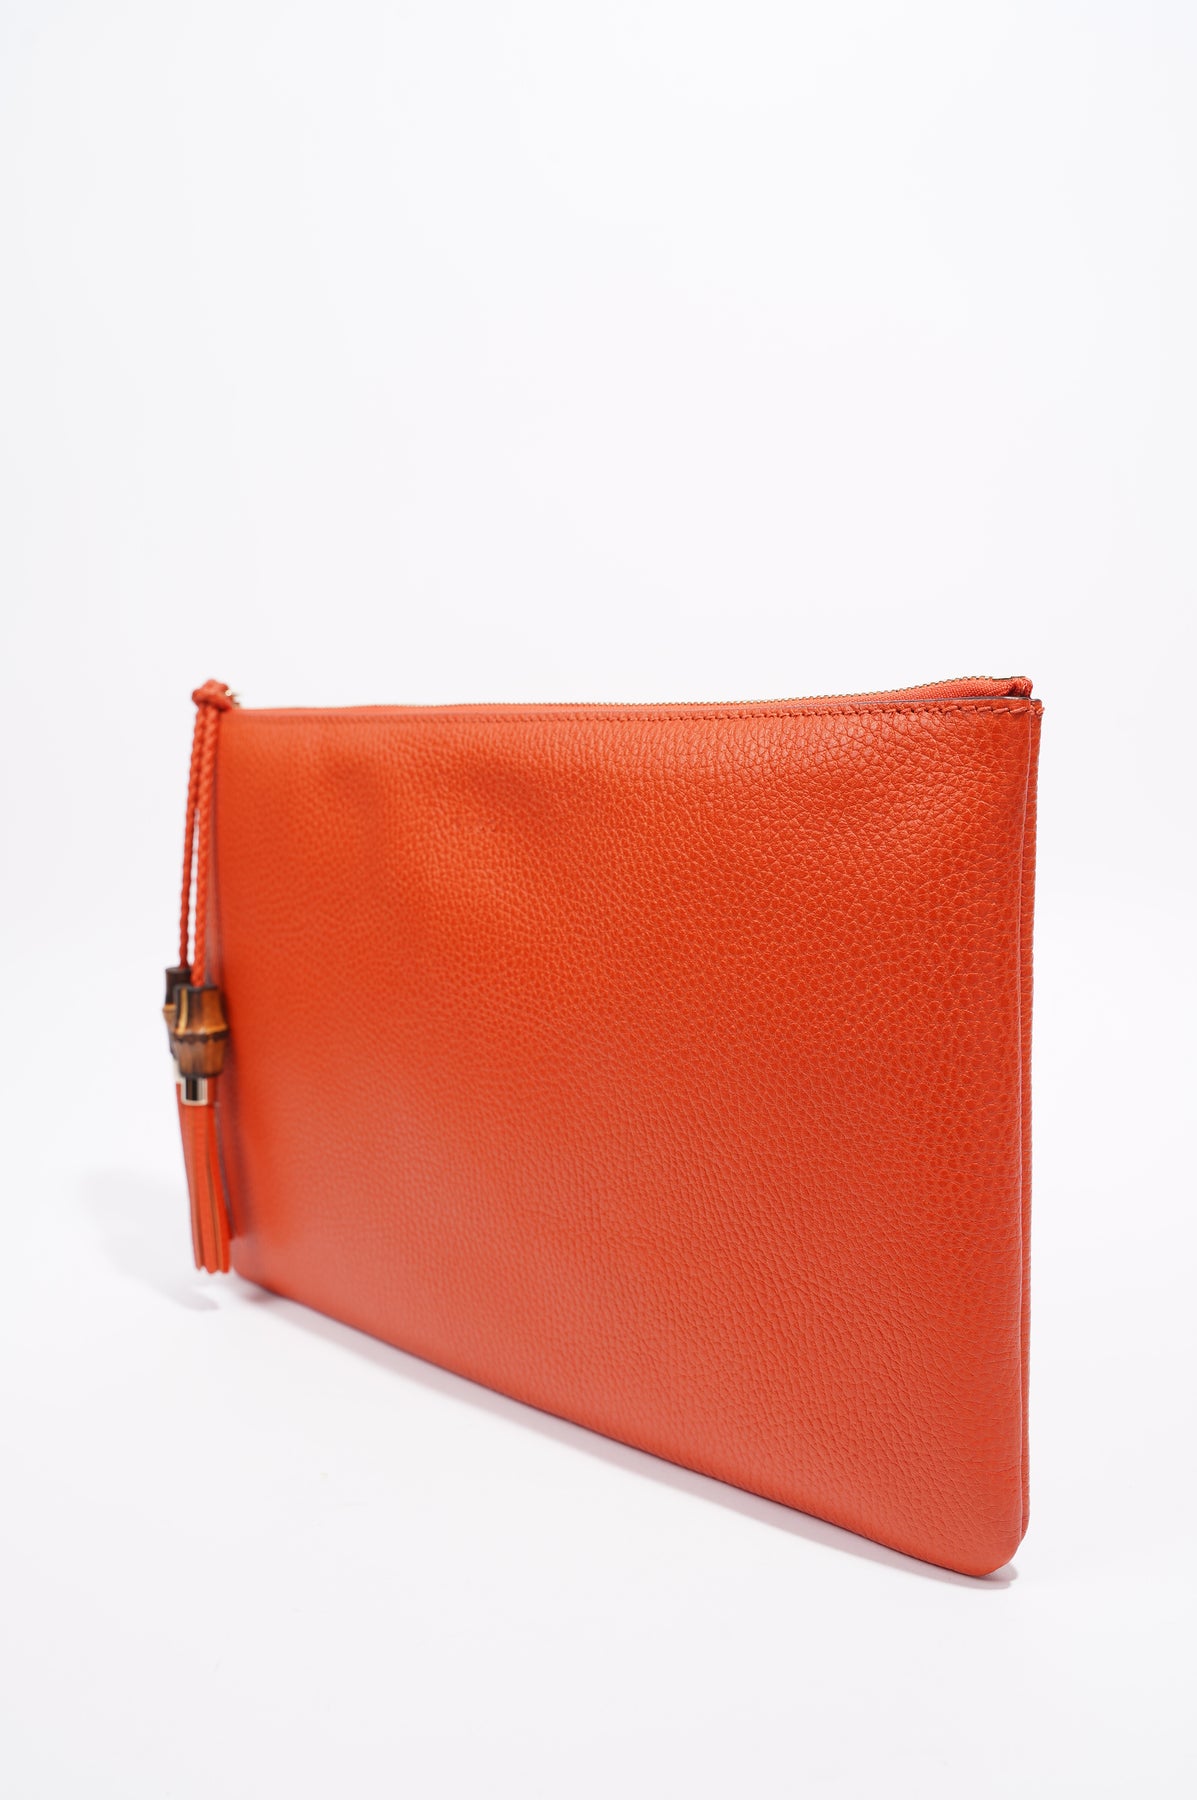 Gucci Blondie small shoulder bag in orange leather | GUCCI® SG